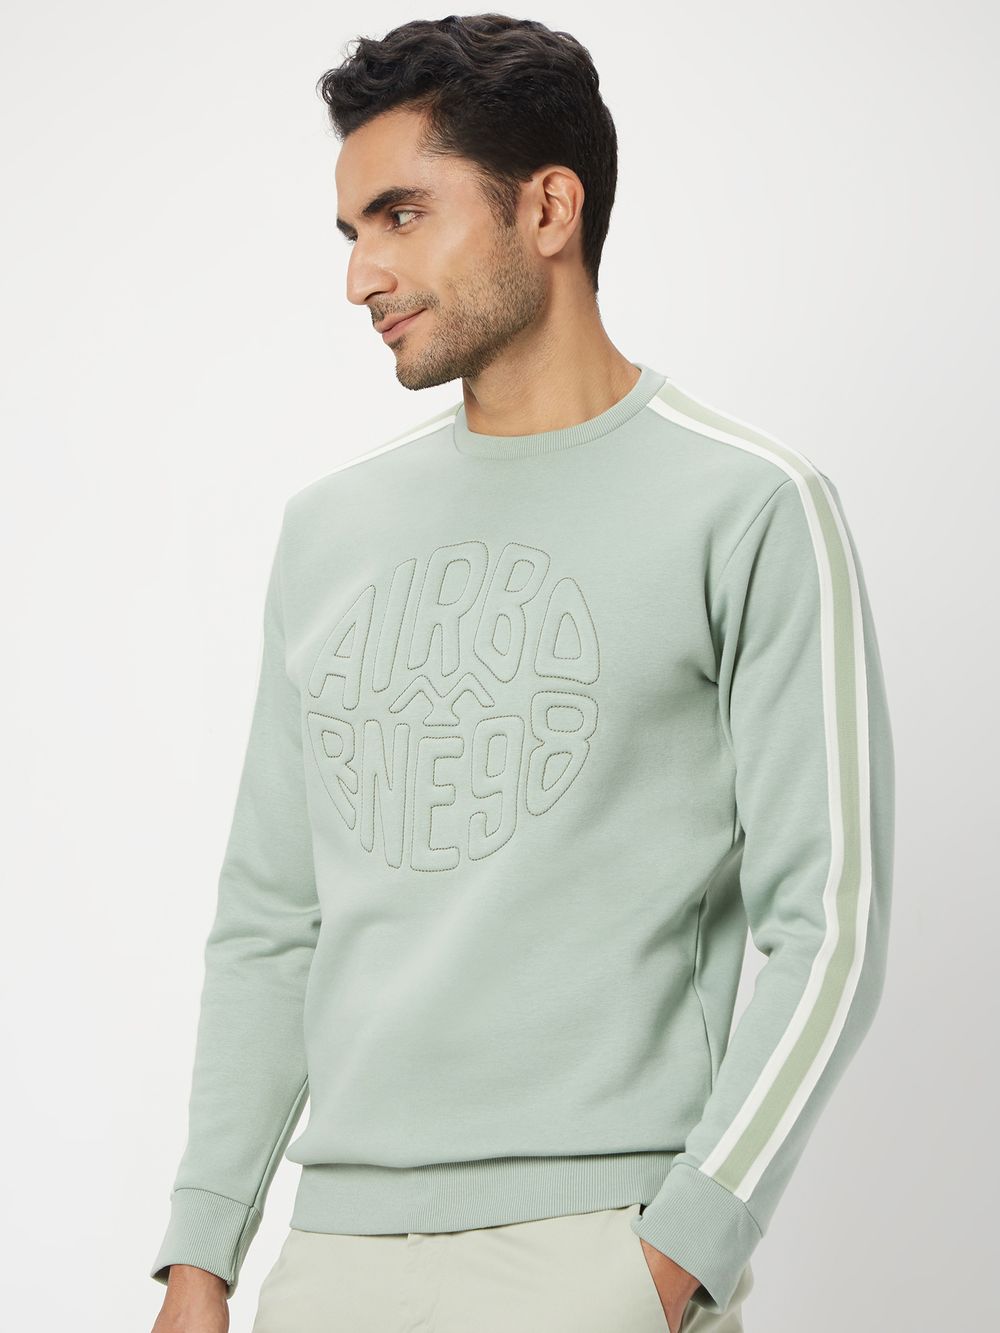 Light Green & White Embossed Embroidery Knitted Fleece Sweatshirt